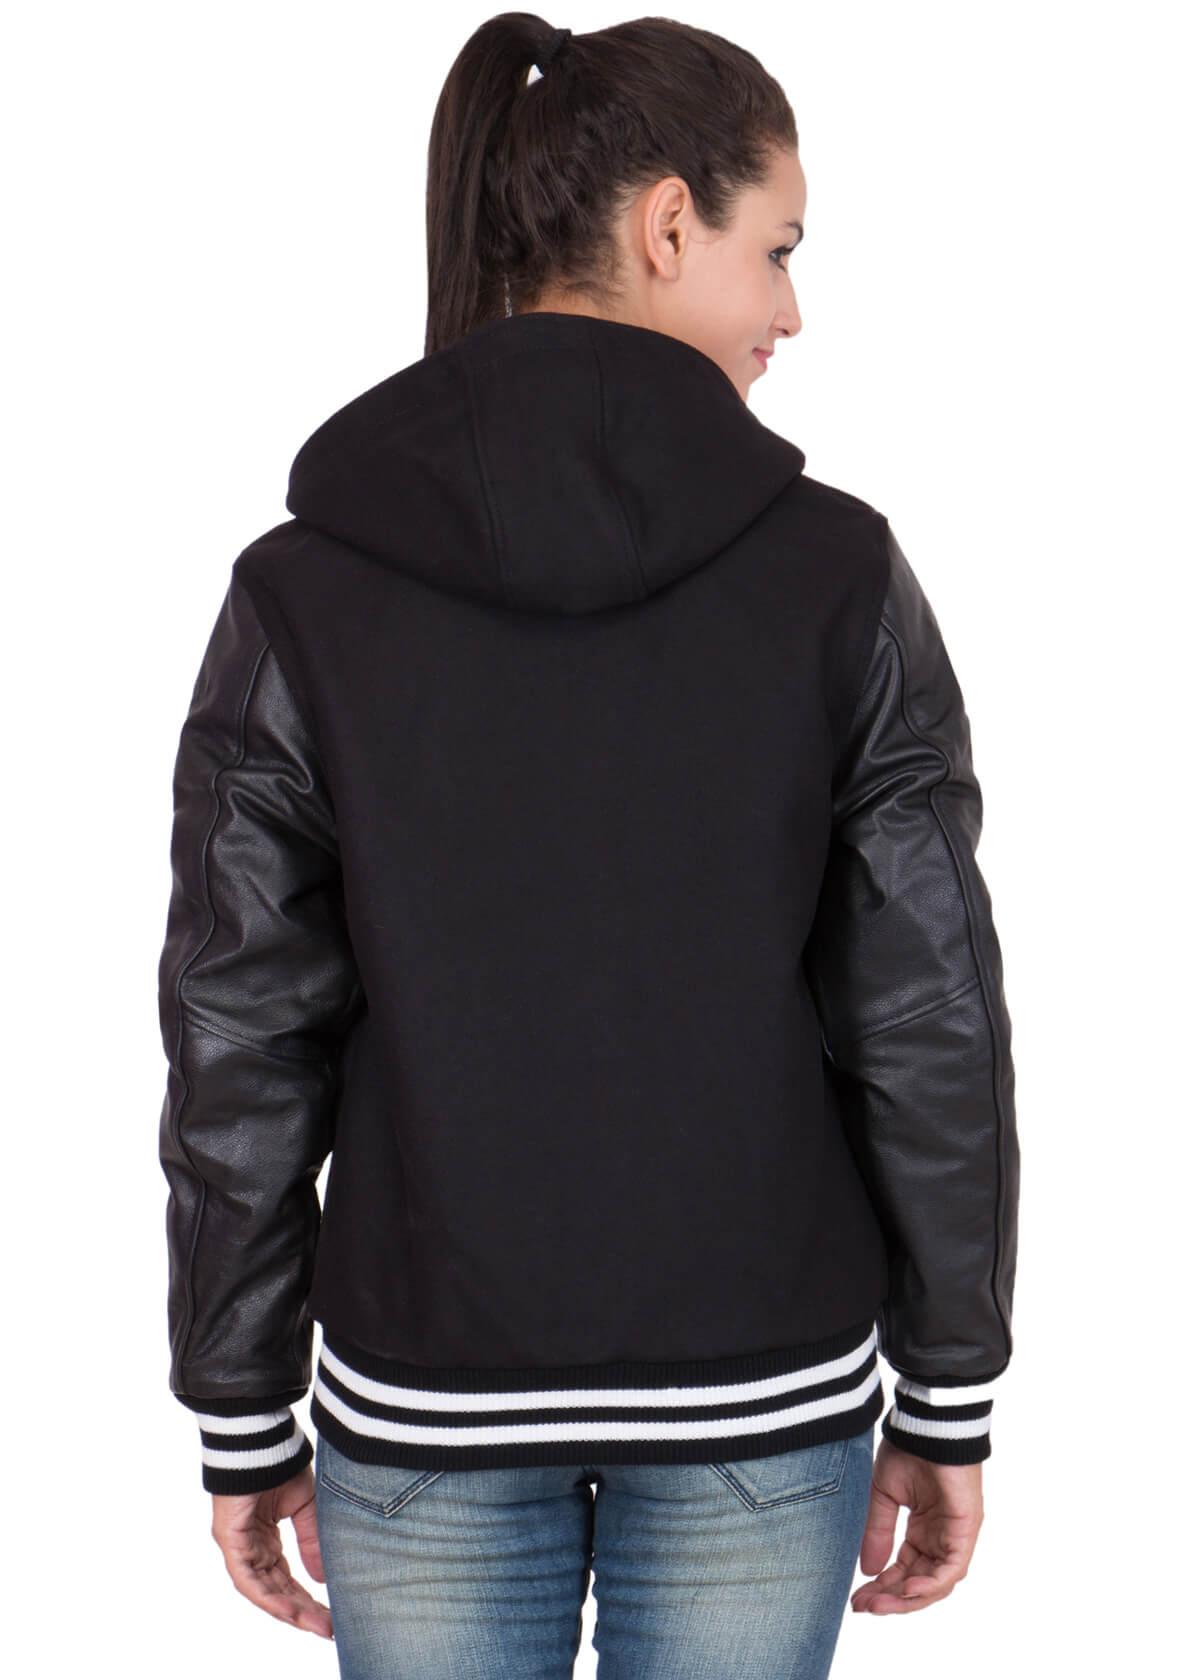 Womens Black Hood Varsity Jacket With Leather Sleeves-5